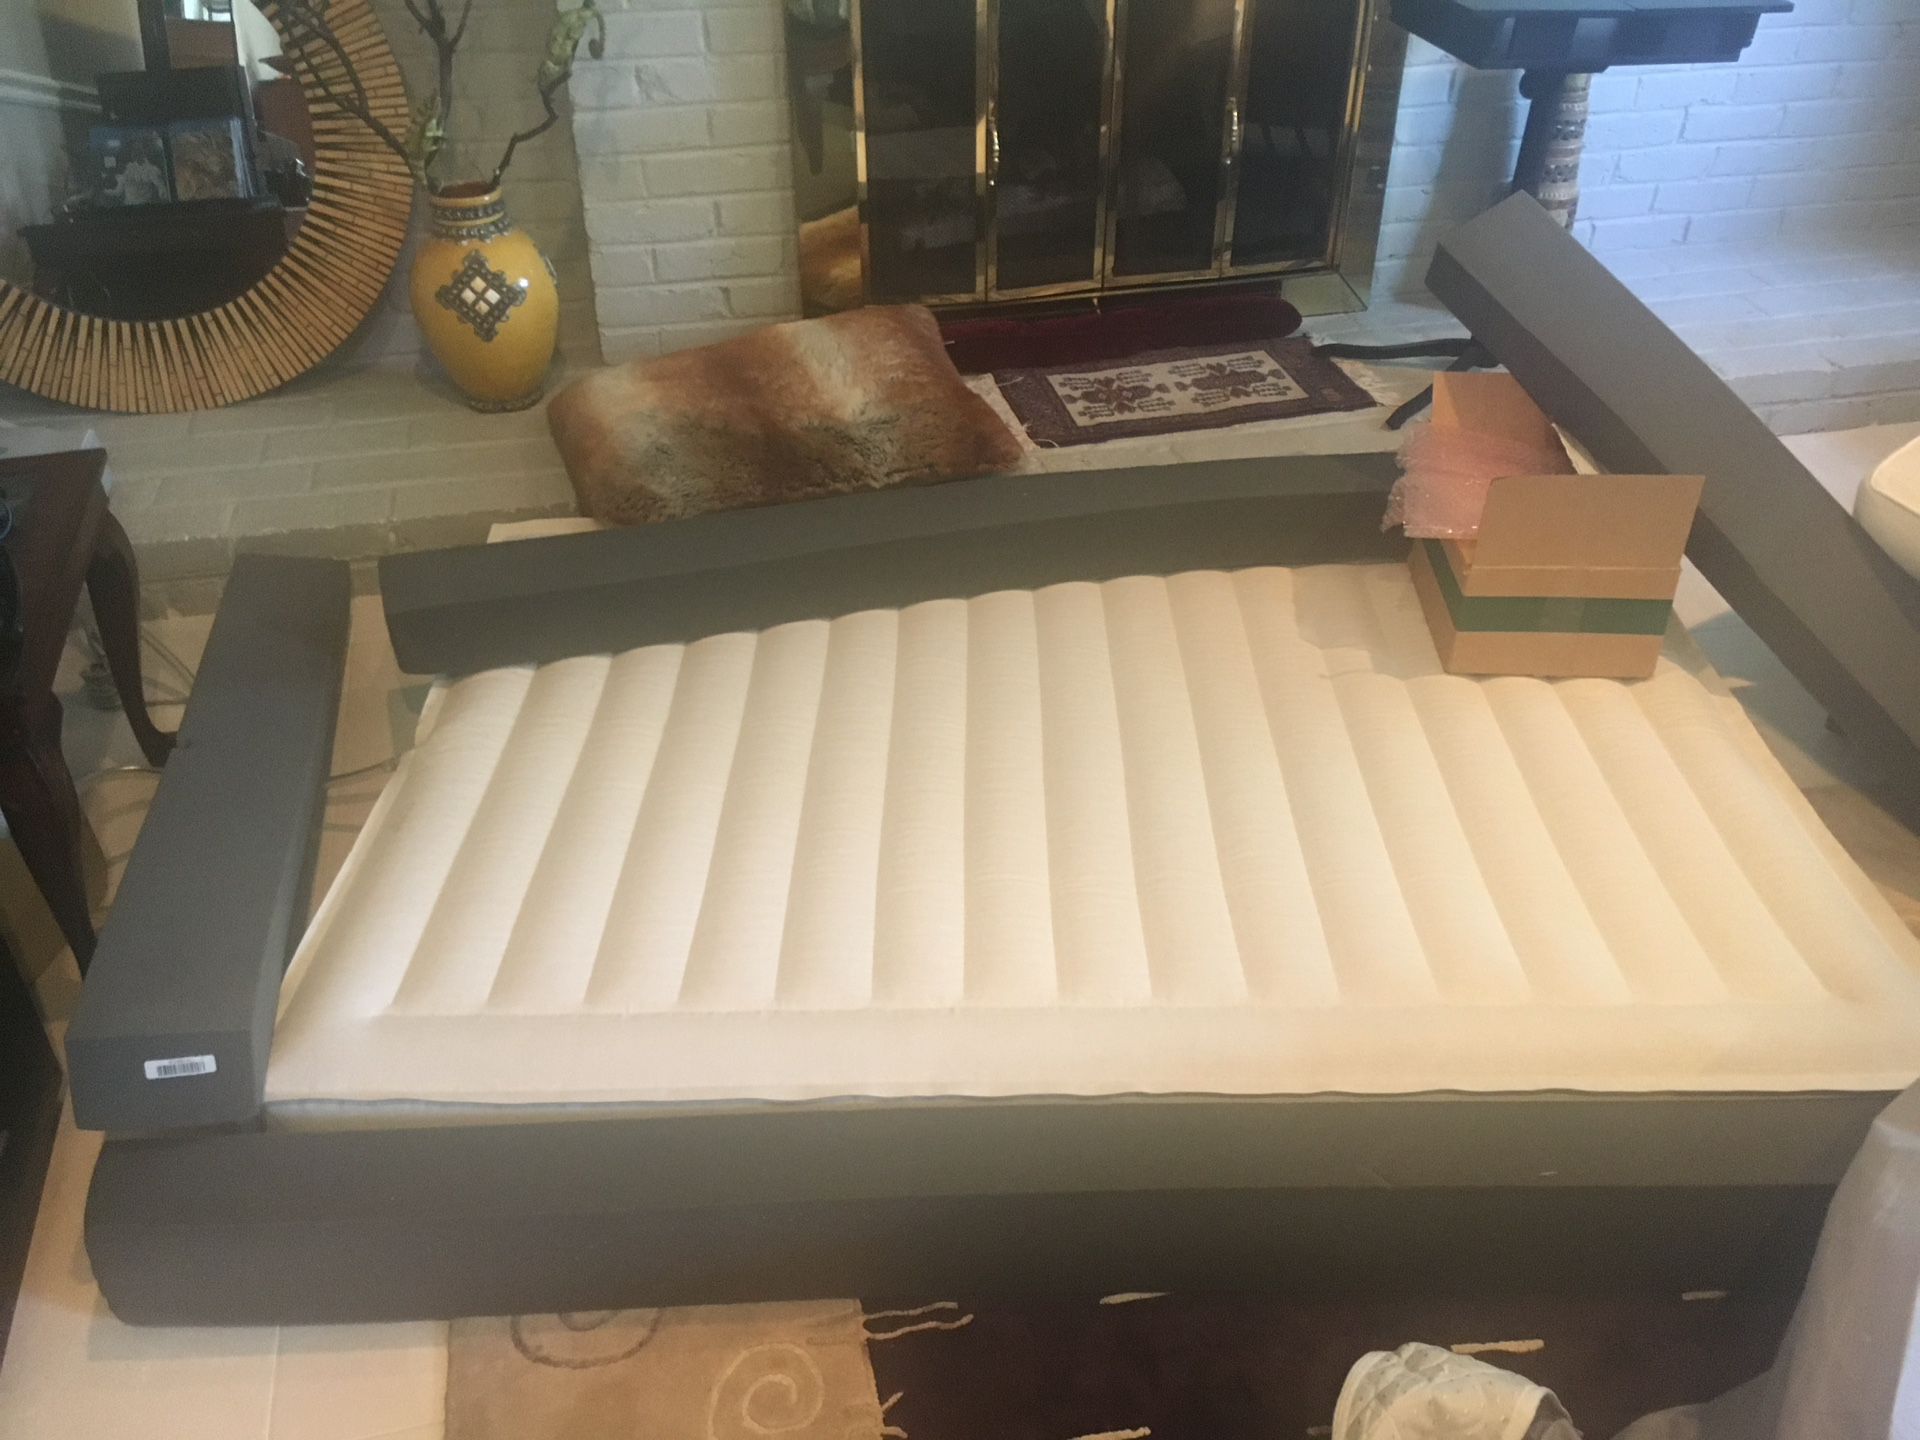 Select confort air mattress with air pump